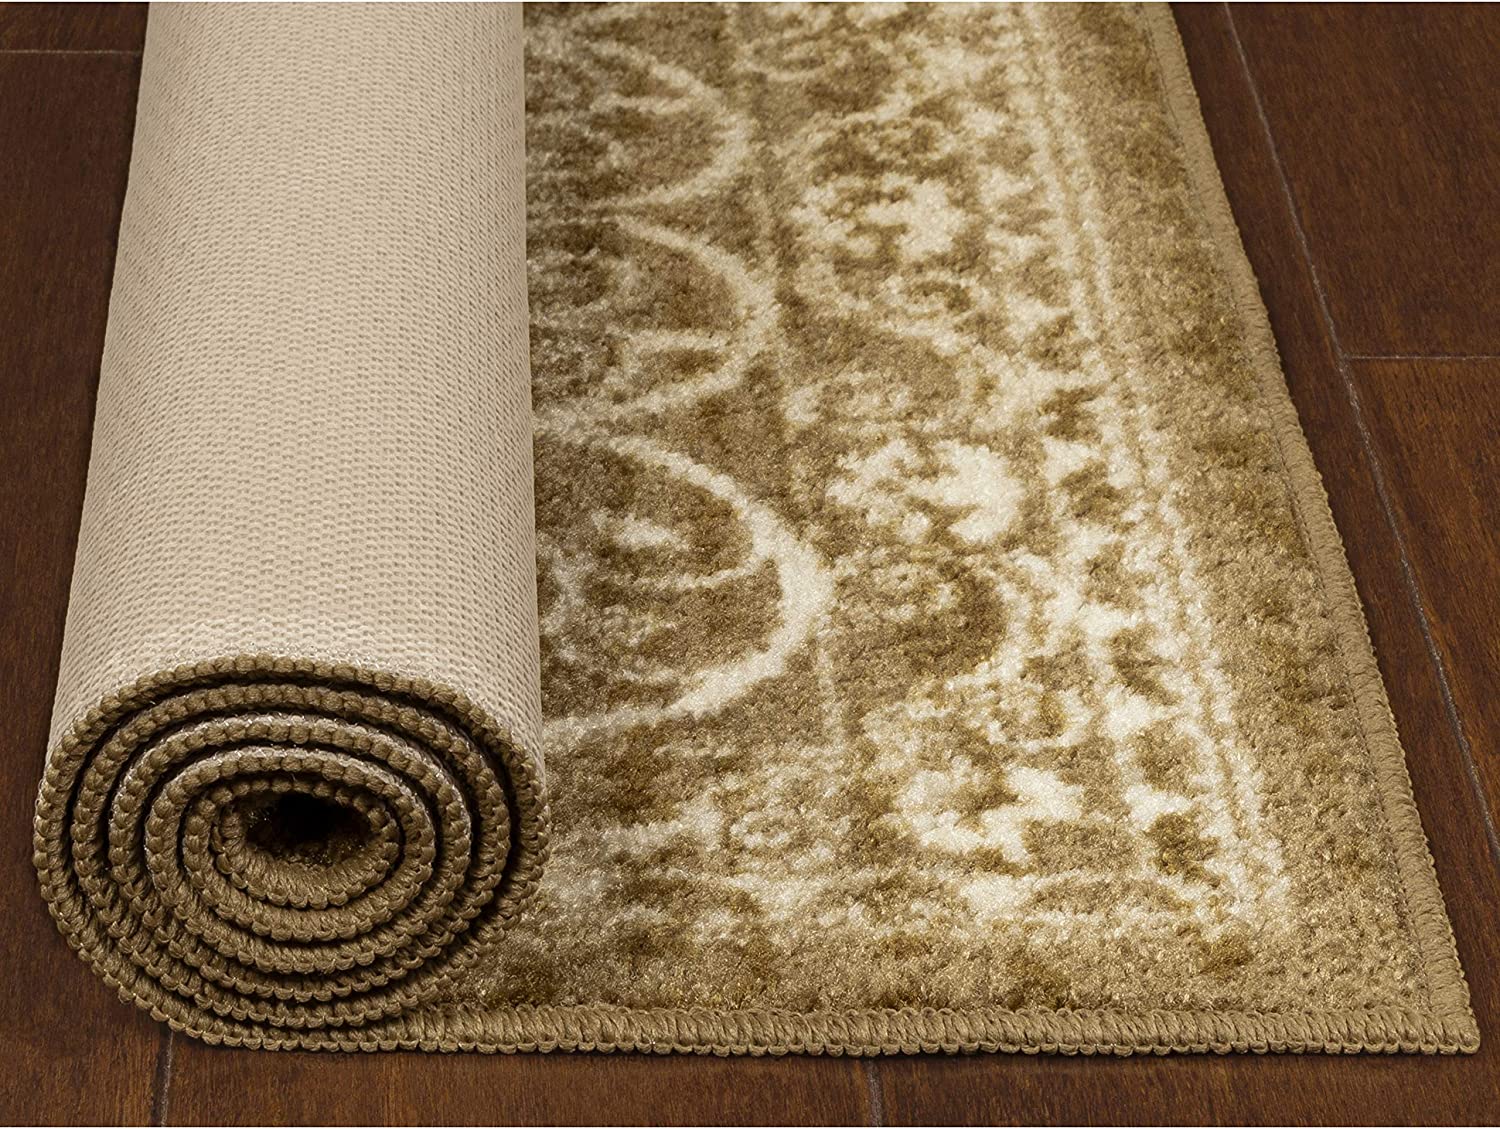 Maples Rugs Pelham Vintage Runner Rug Non Slip Washable Hallway Entry Carpet  [Made in USA], 2 x 6, Grey/Blue